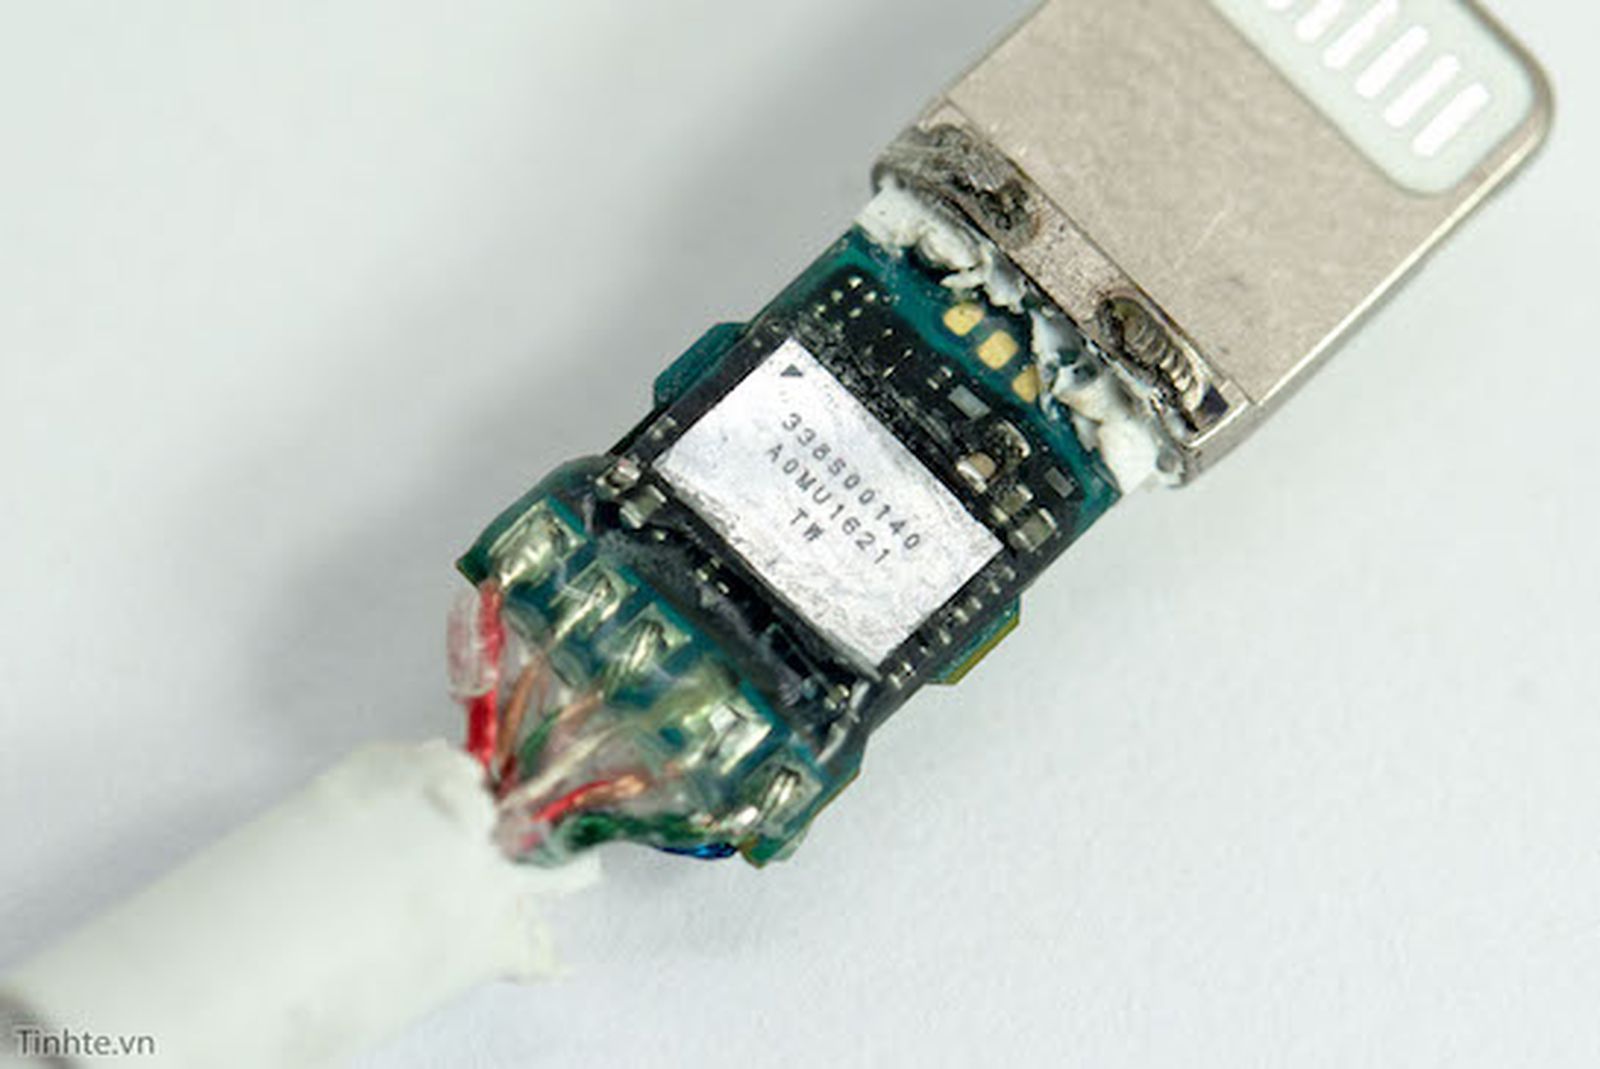 Teardown Confirms Digital-to-Analog Converter in Lightning EarPods and  3.5mm Adapter - MacRumors